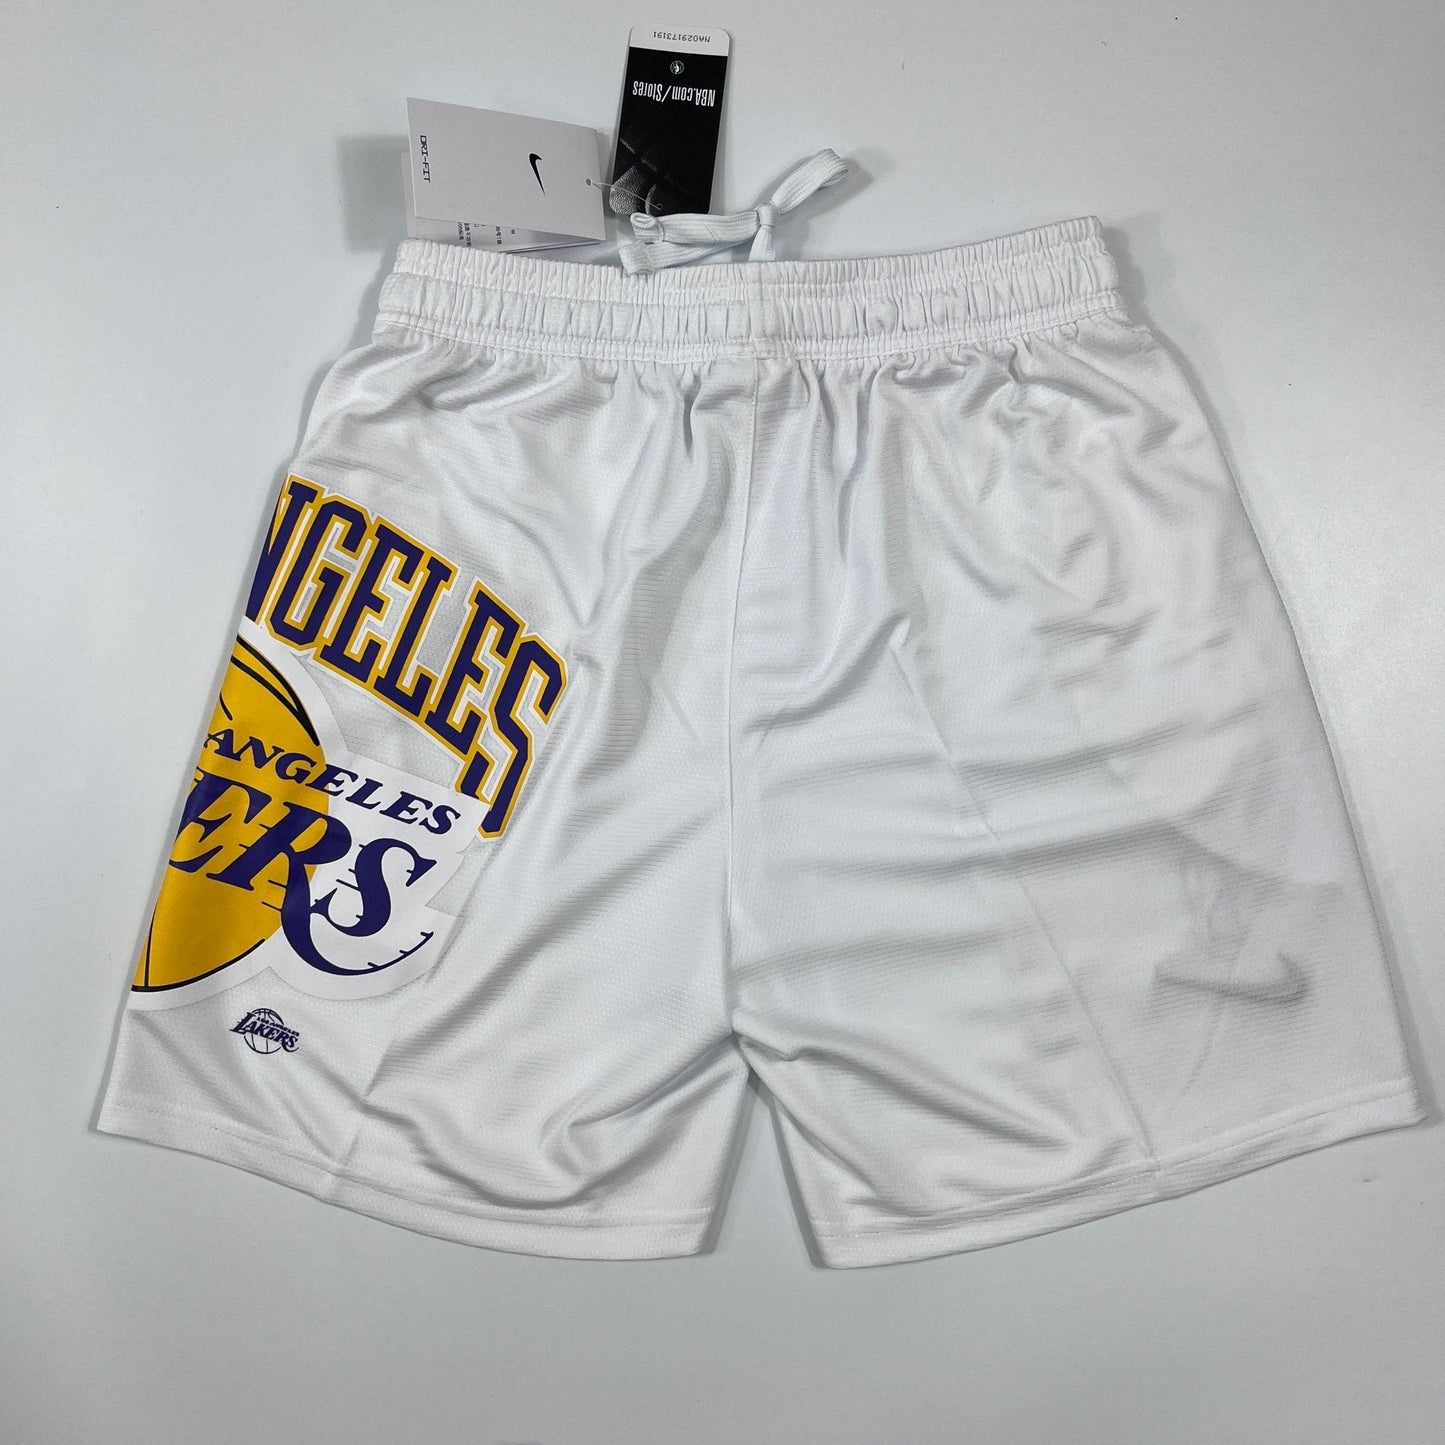 Shorts casual do Lakers branco